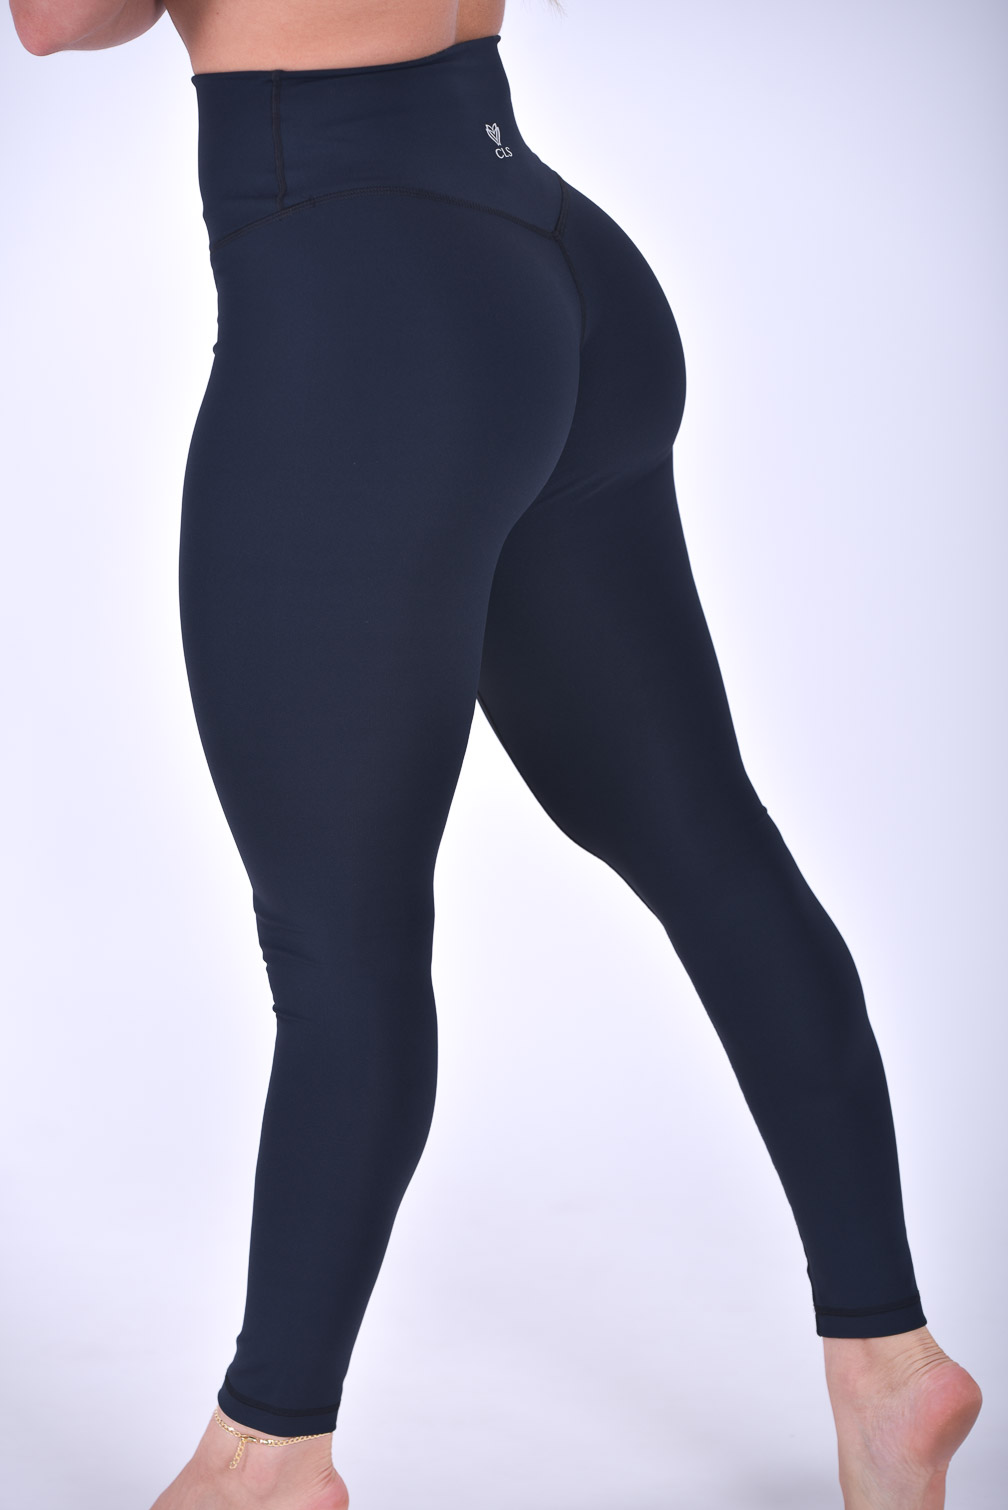 CHRLEISURE Grid Tights Yoga Pants Women Seamless High Waist Leggings B –  Virtual Blue Store